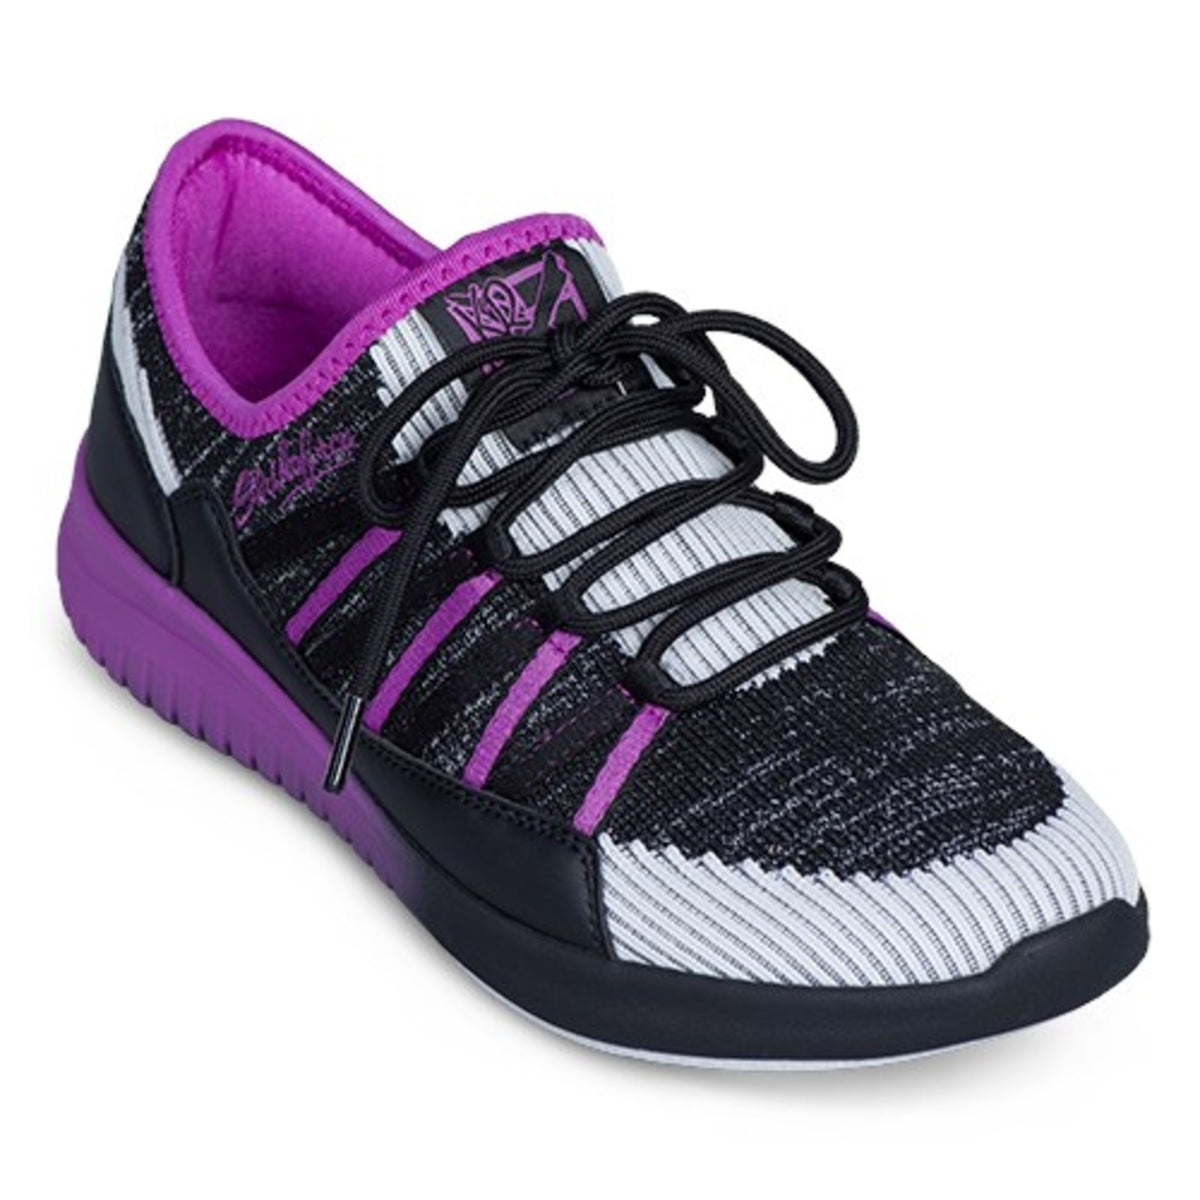 Jazz Black/Purple Shoes